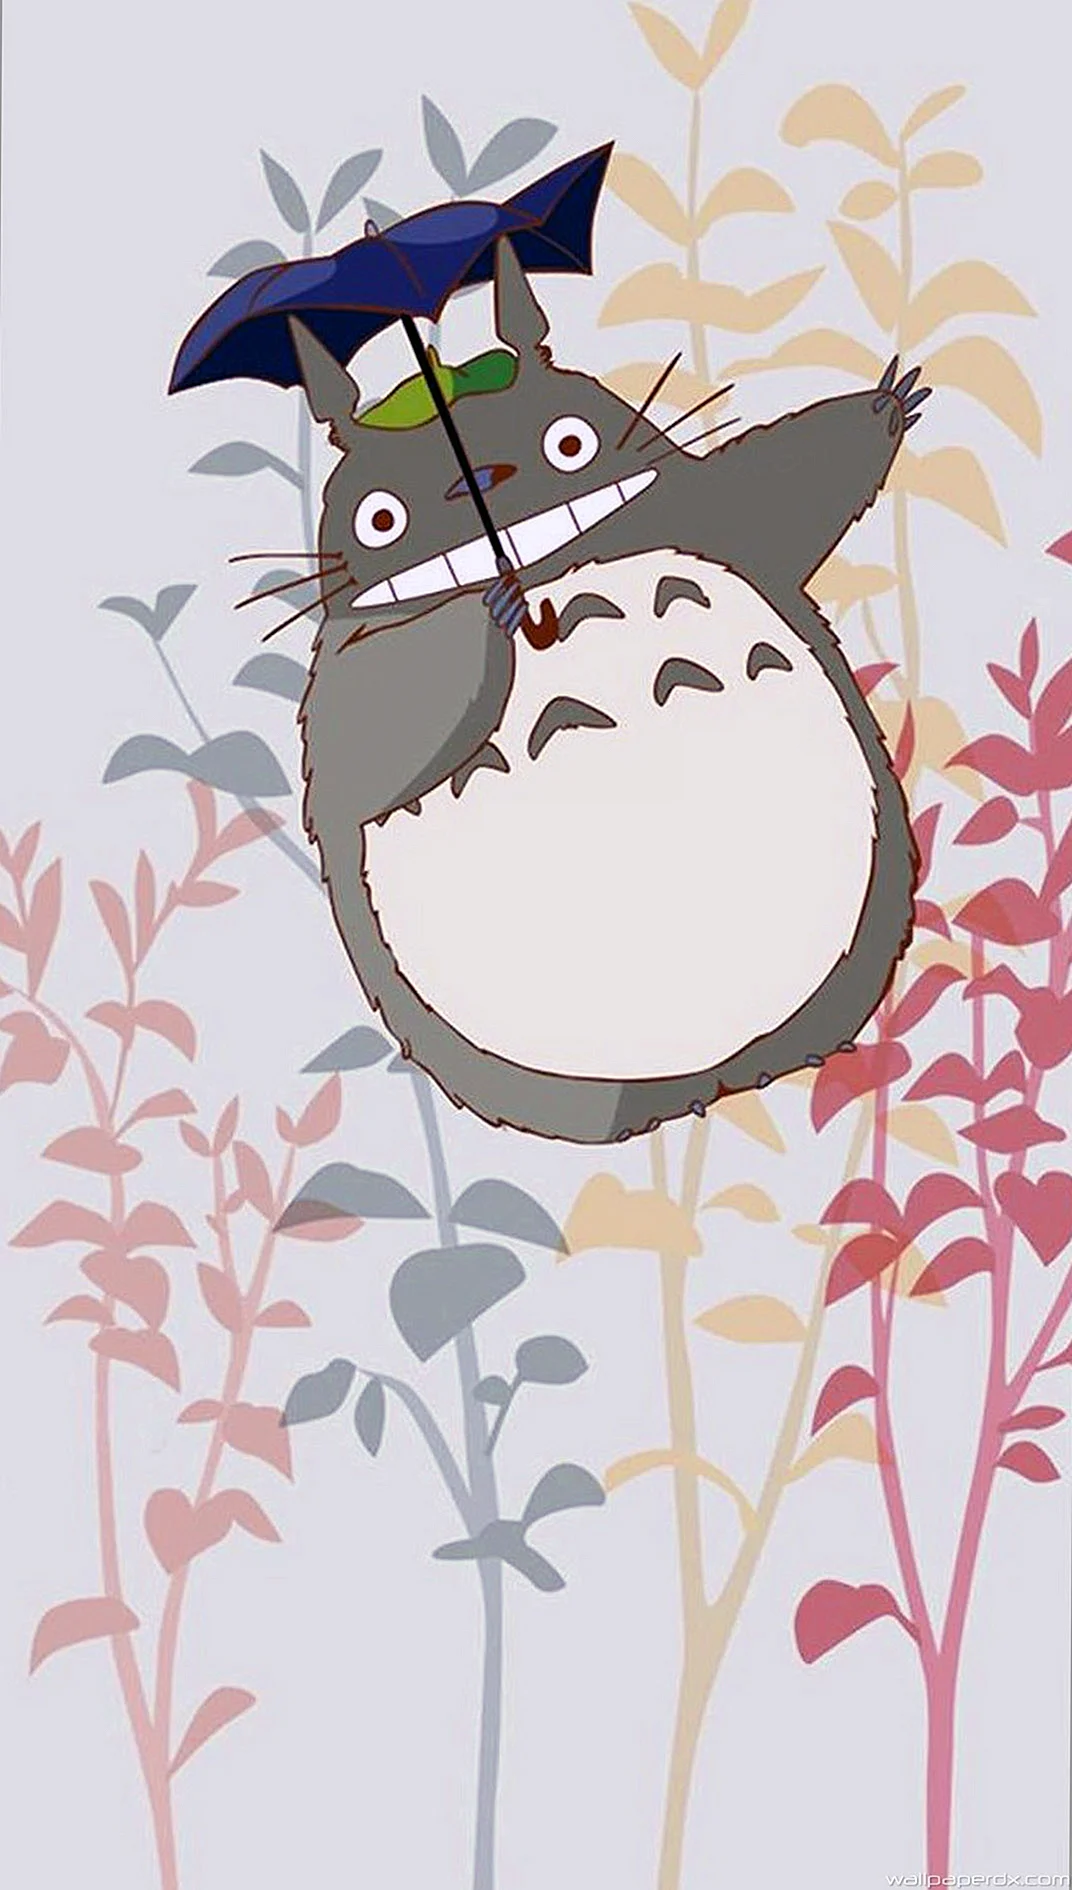 Totoro Wallpaper For iPhone